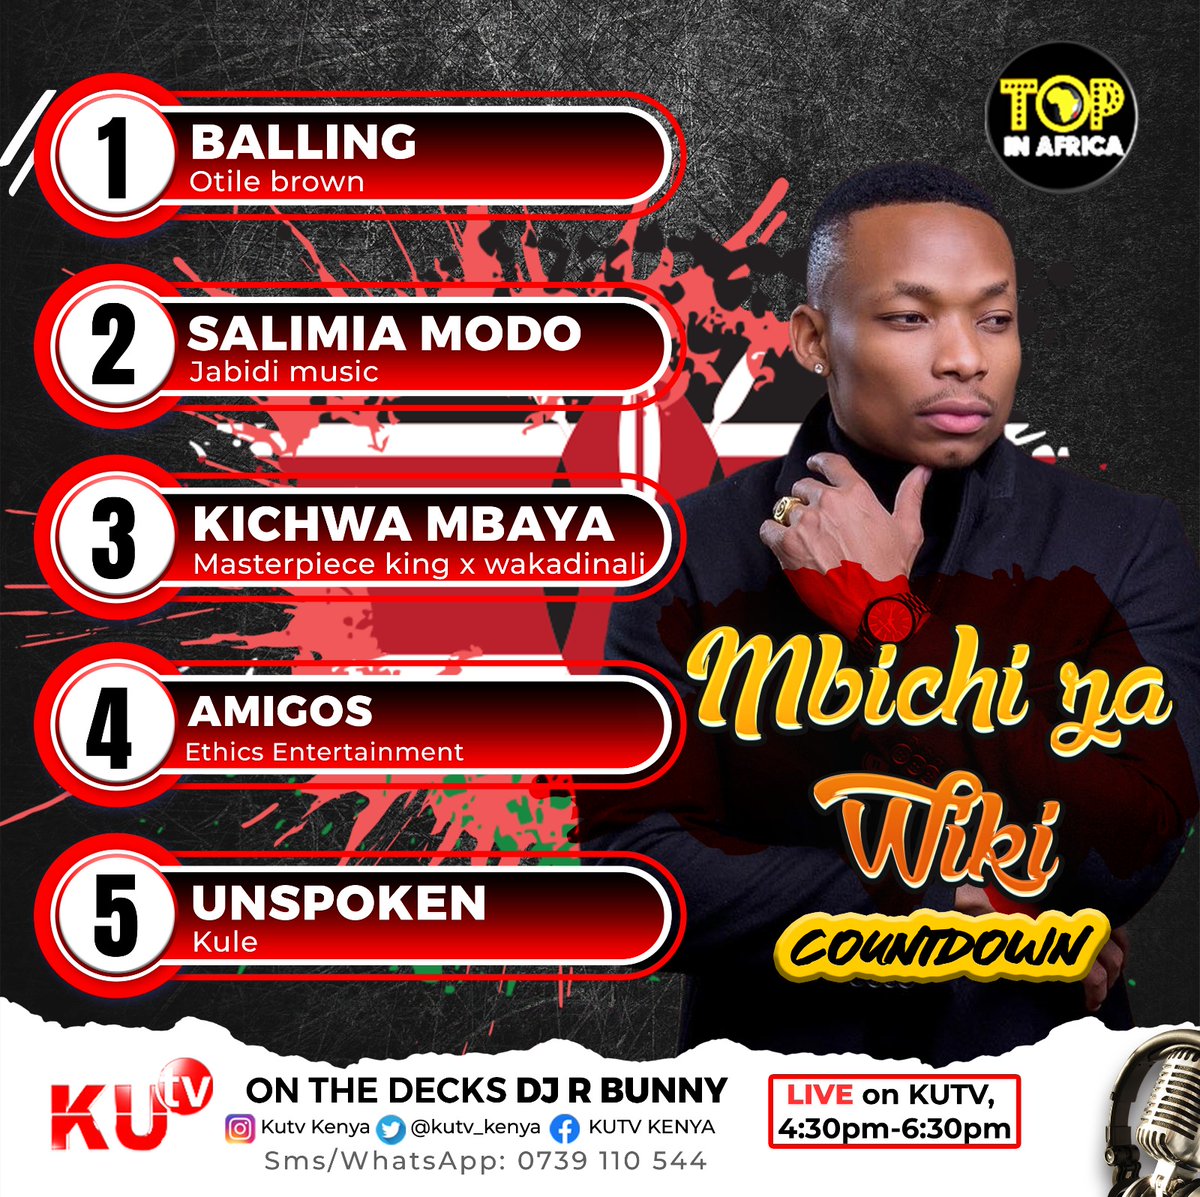 Top In Africa presents the new tunes in town! 1. Balling- @otilebrown 2. Salimia Modo- @jabidii_music 3. Kichwa Mbaya- @masterpieceking_ @wakadinali 4. Amigos- Ethics Entertainment 5. Unspoken - Kule